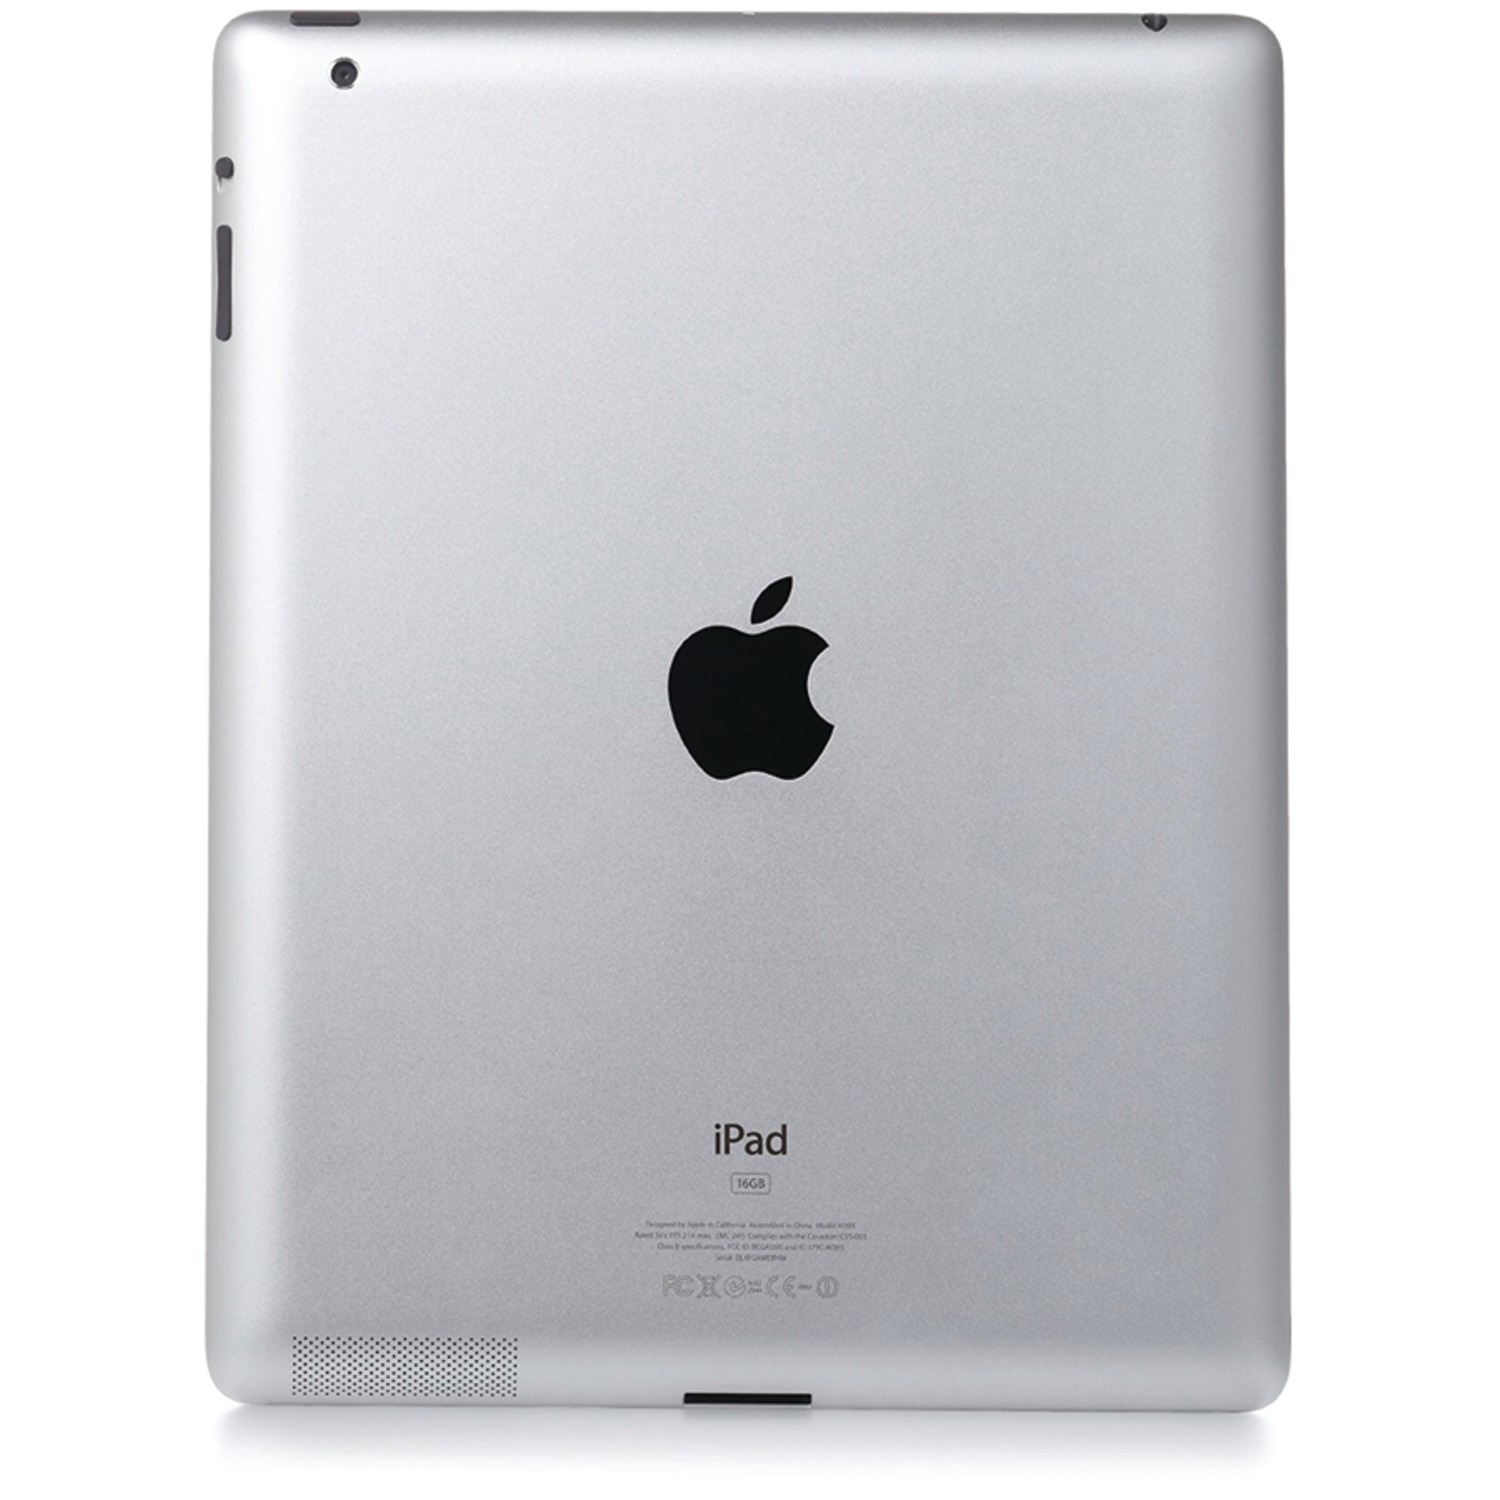 Restored MP2 - Apple iPad 2 with Wi-Fi 16GB - Black (2nd generation) MC769 (Refurbished) - image 2 of 4